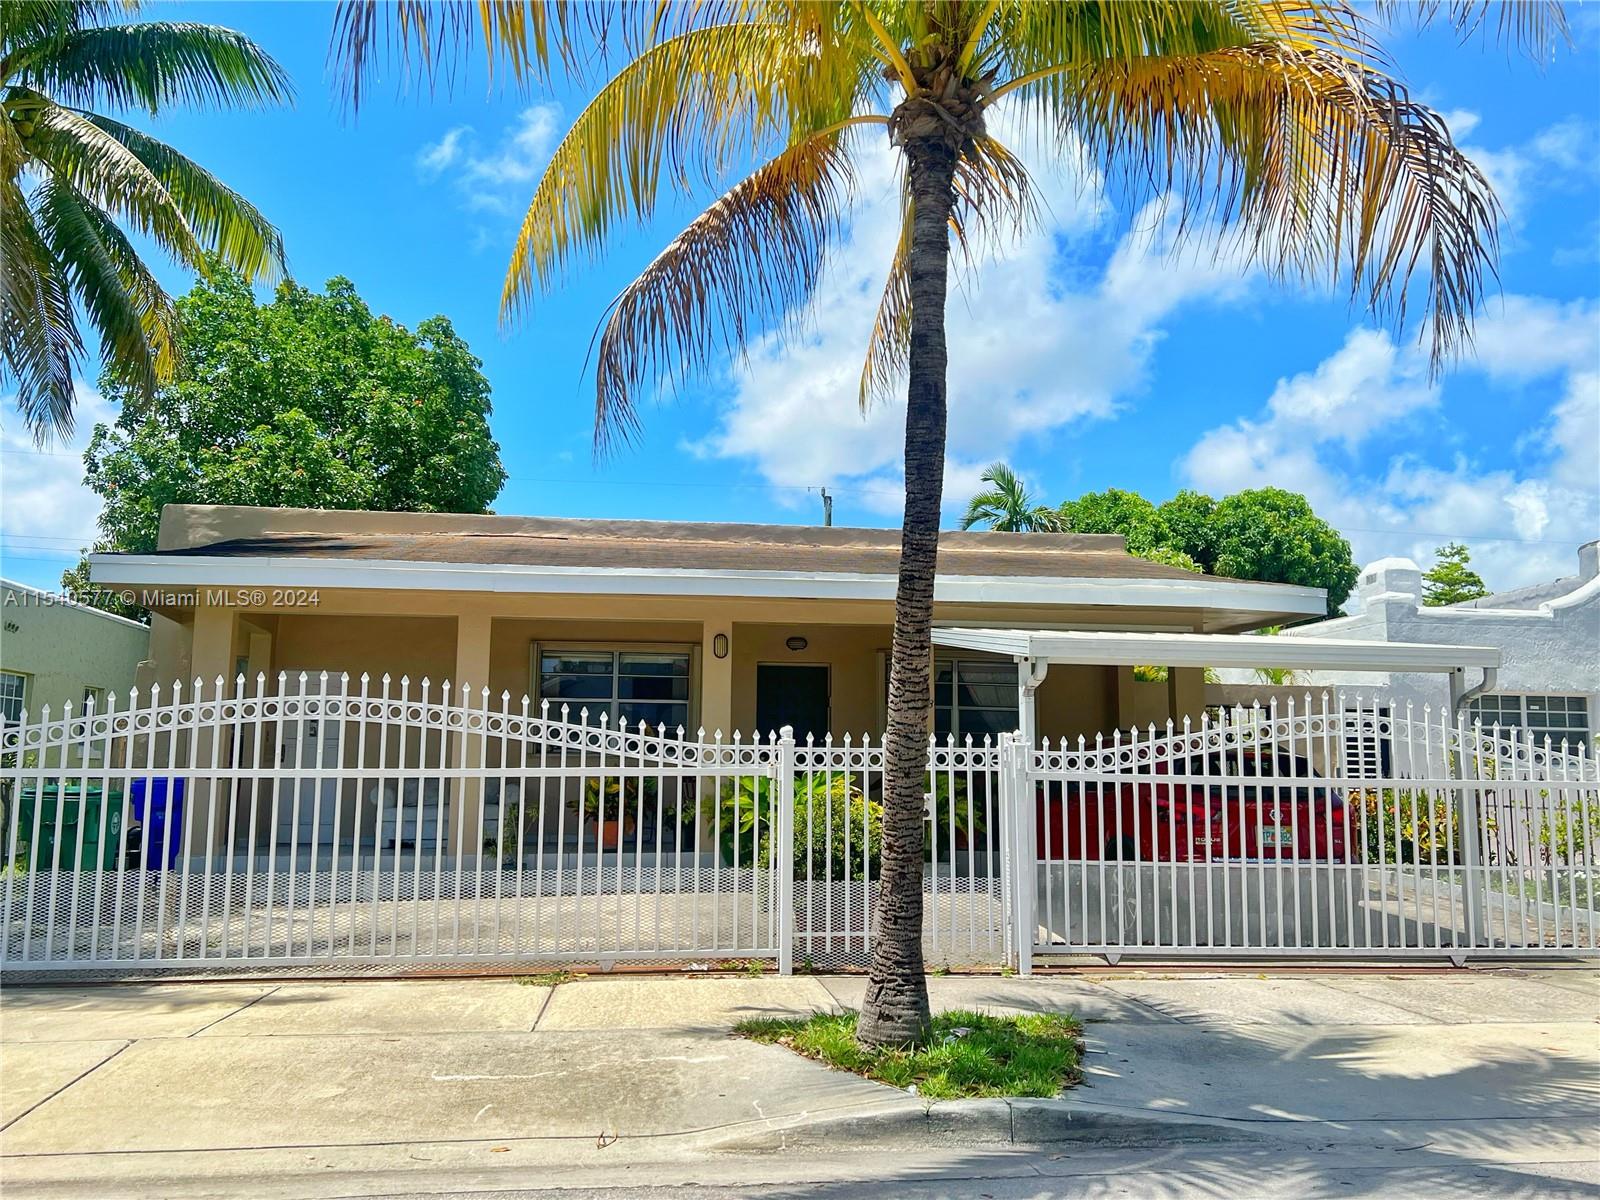 Rental Property at 2273 Sw 5th Steet St, Miami, Broward County, Florida -  - $655,000 MO.